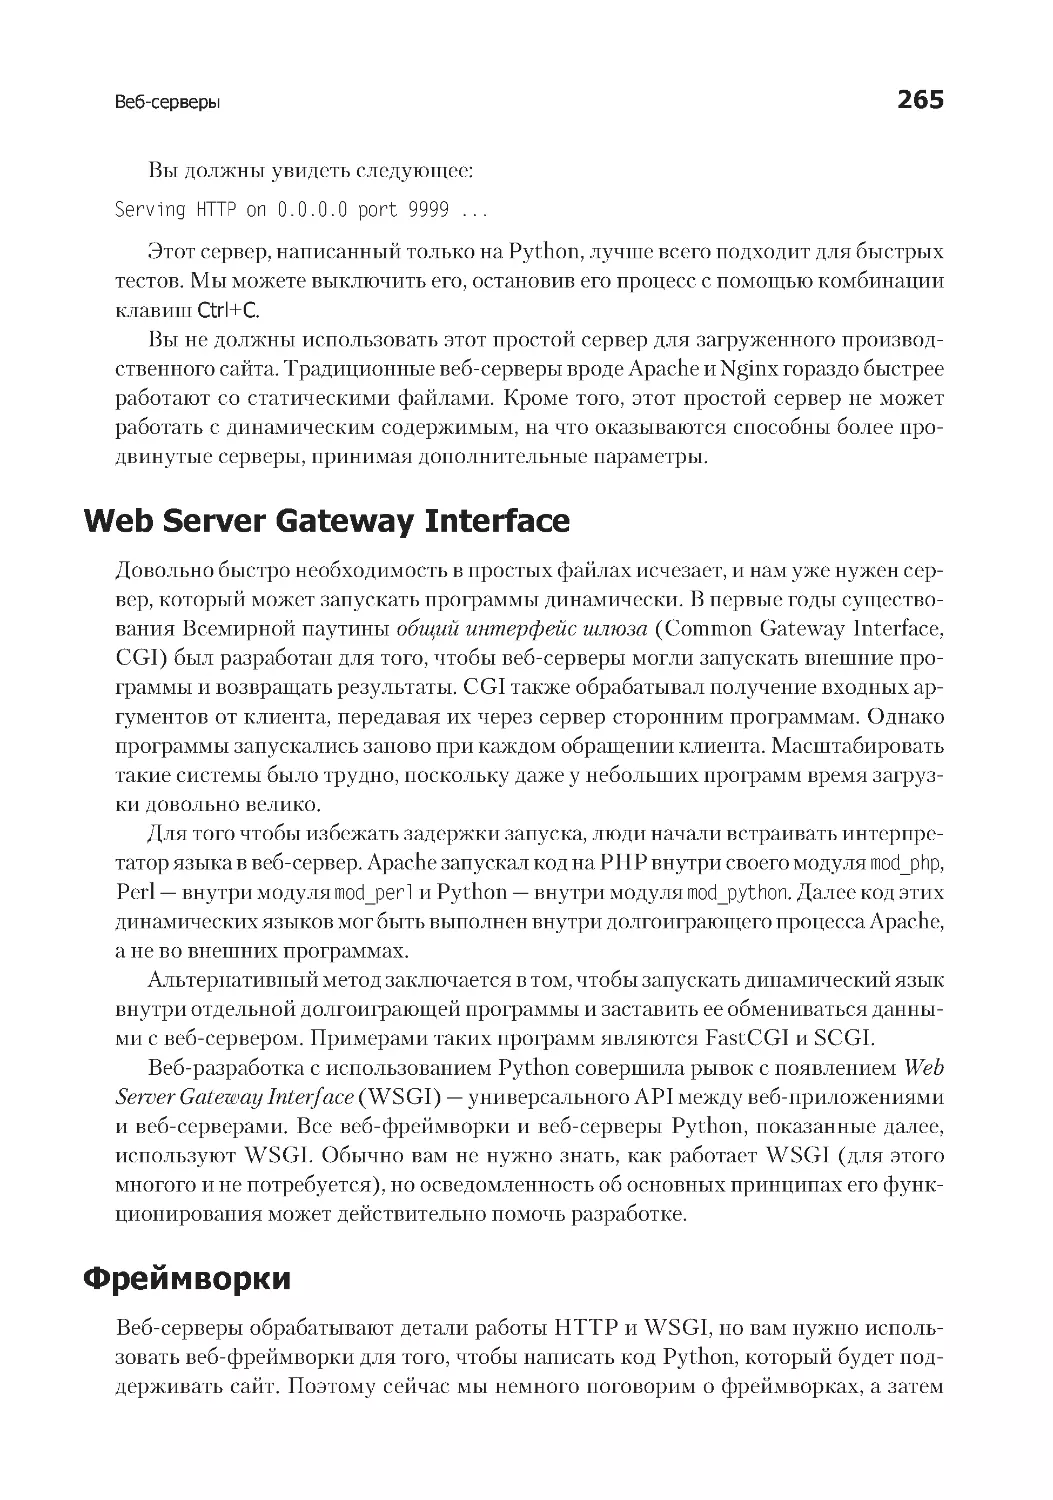 Web Server Gateway Interface
Фреймворки